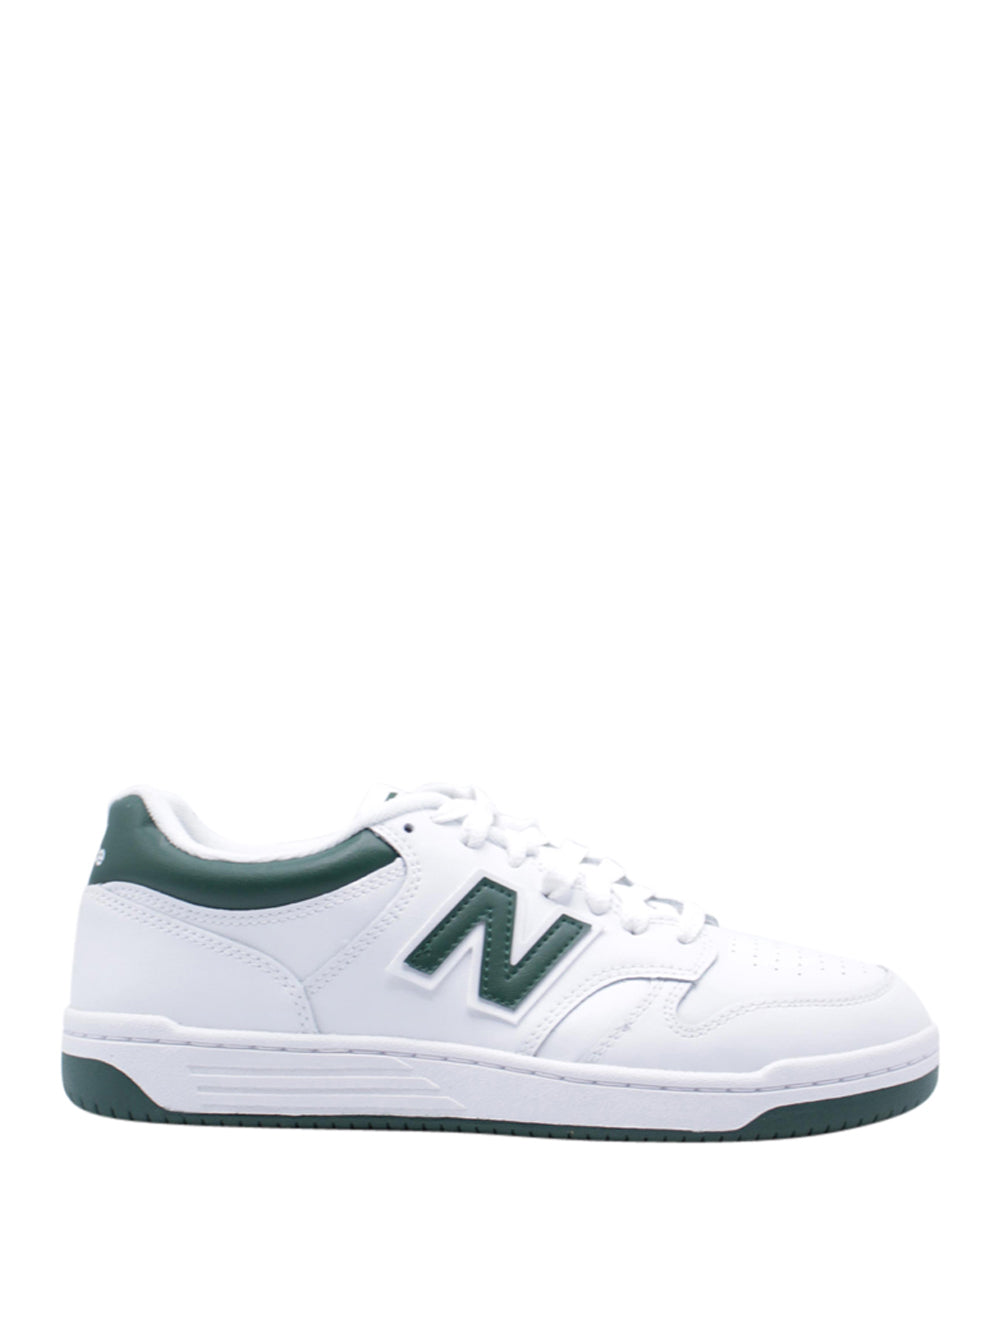 NEW BALANCE Sneakers Uomo - Bianco modello BB480LNG